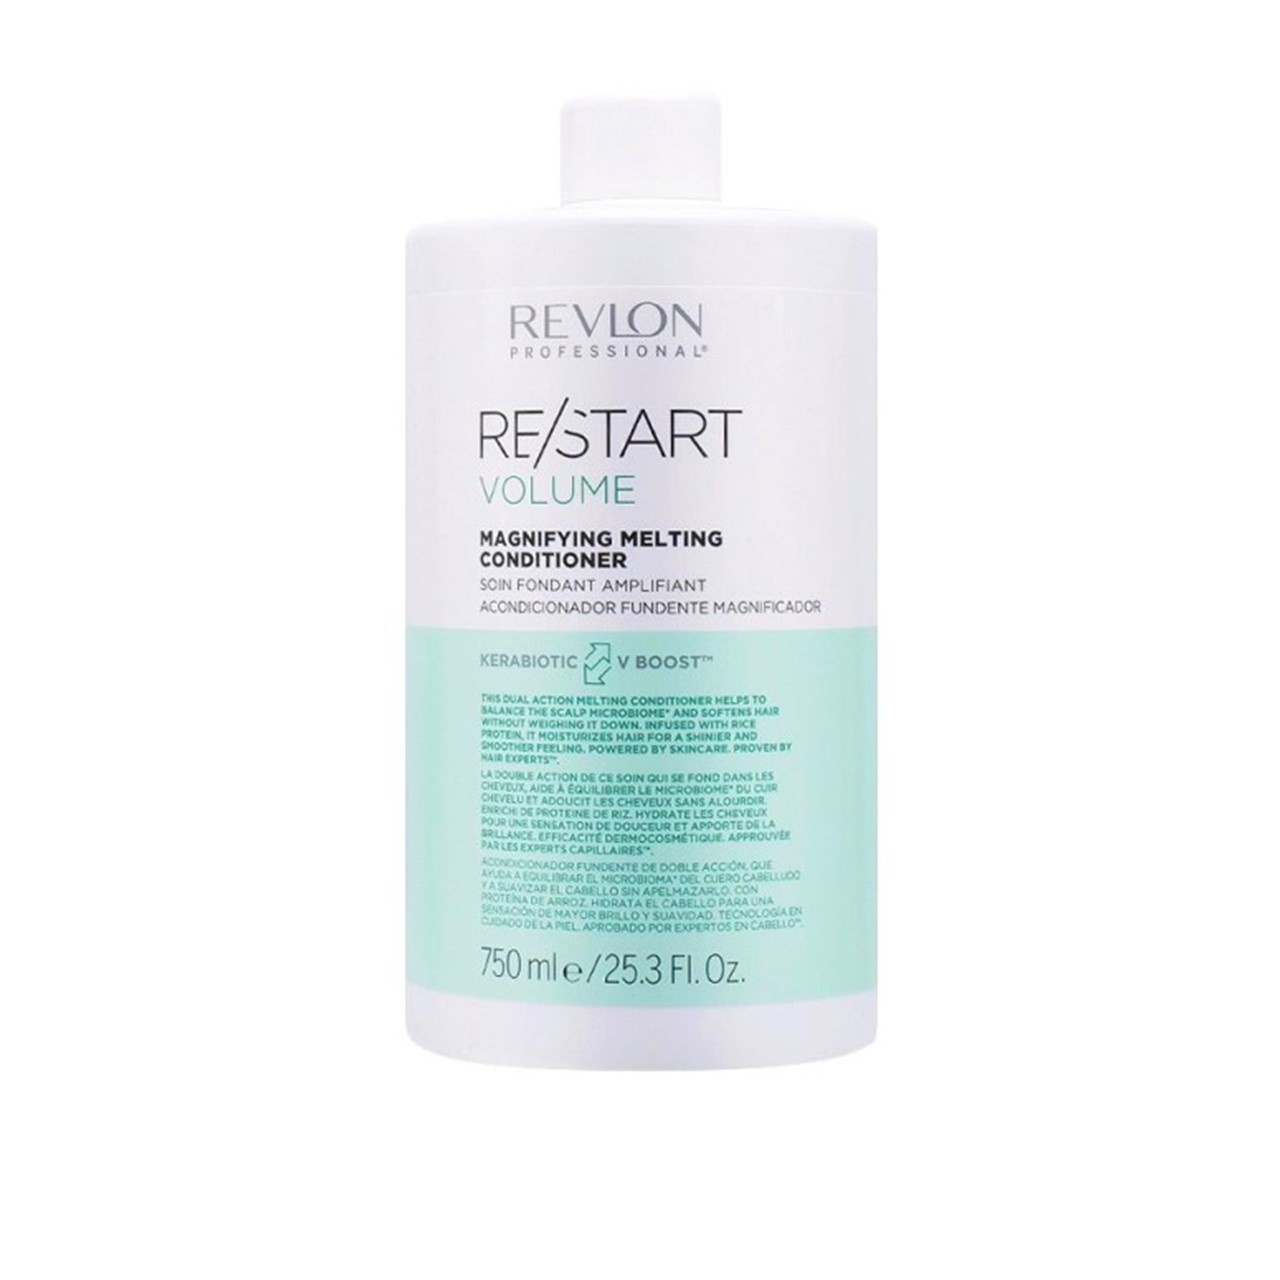 Buy Revlon Professional Re/Start Volume Conditioner USA · Magnifying Melting